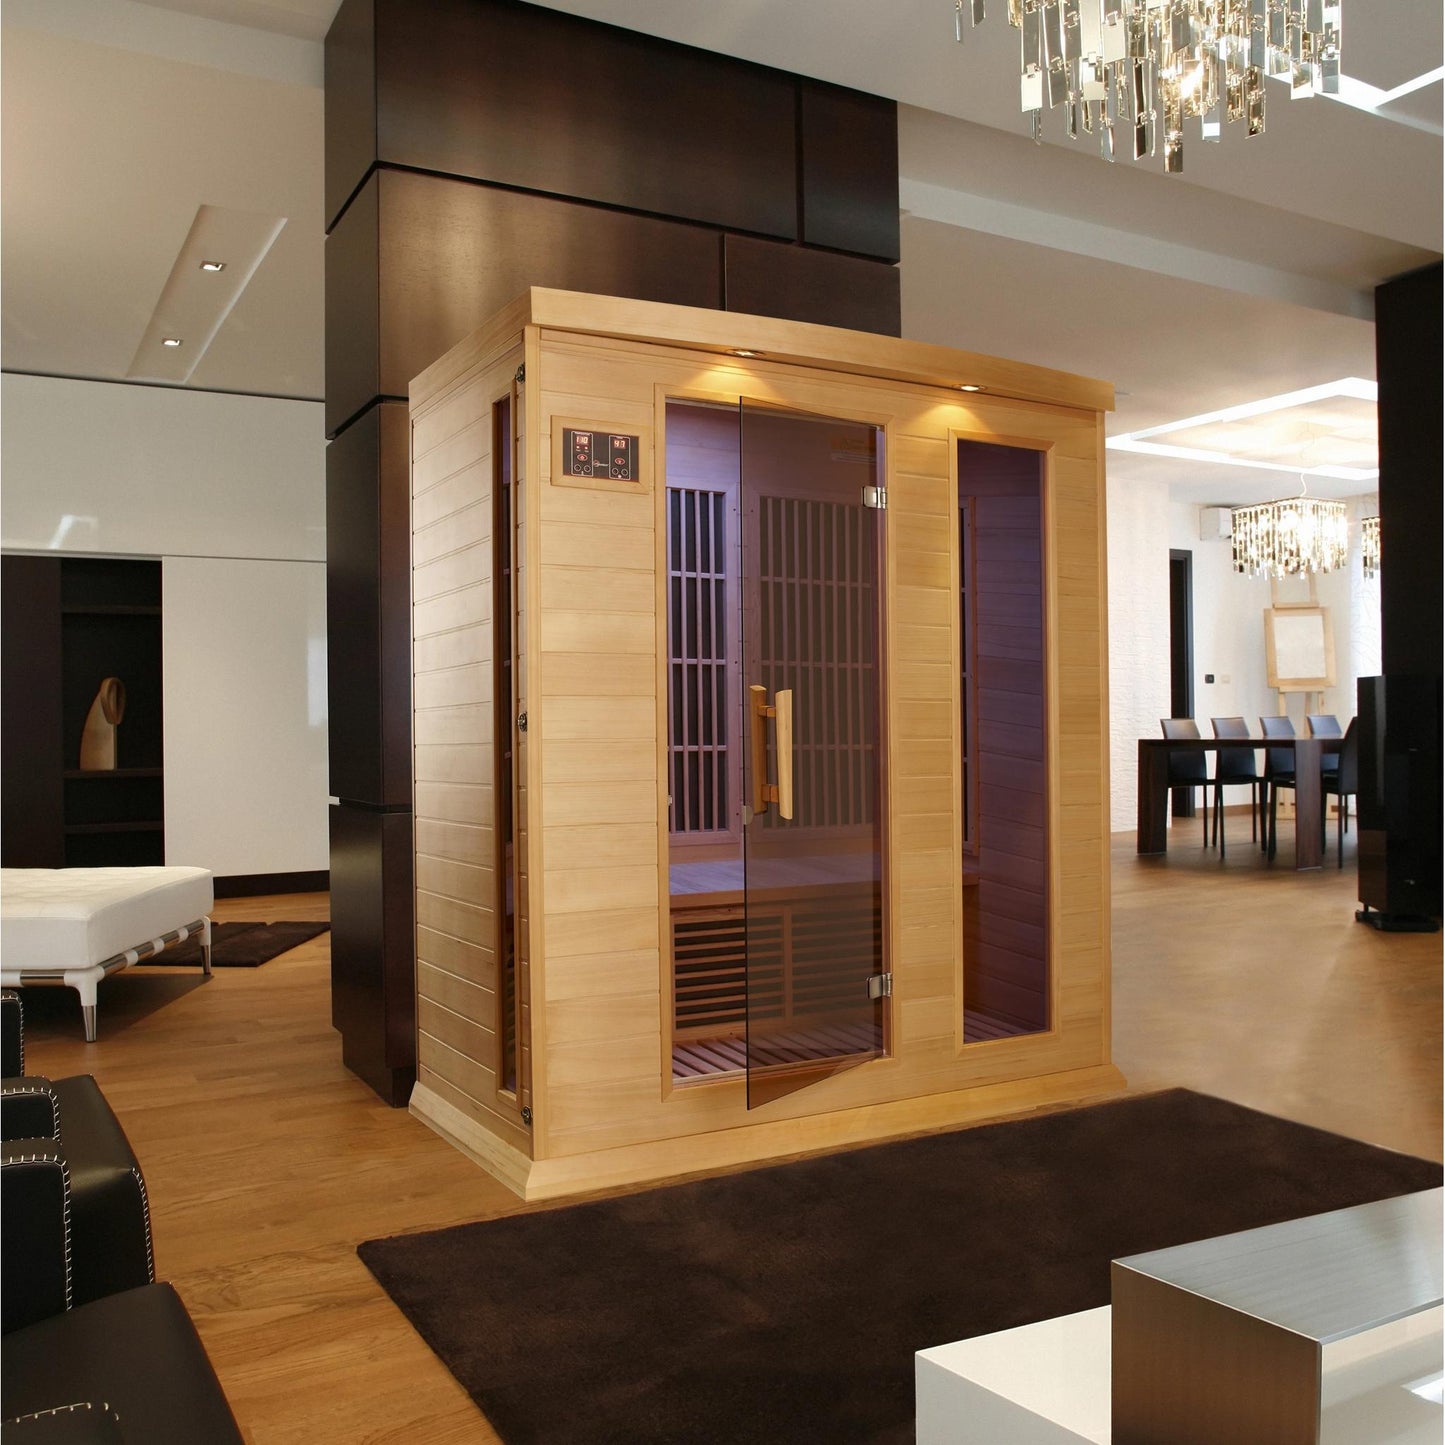 Golden Designs Maxxus 3-Person Low EMF FAR Infrared Carbon Sauna in Canadian Hemlock